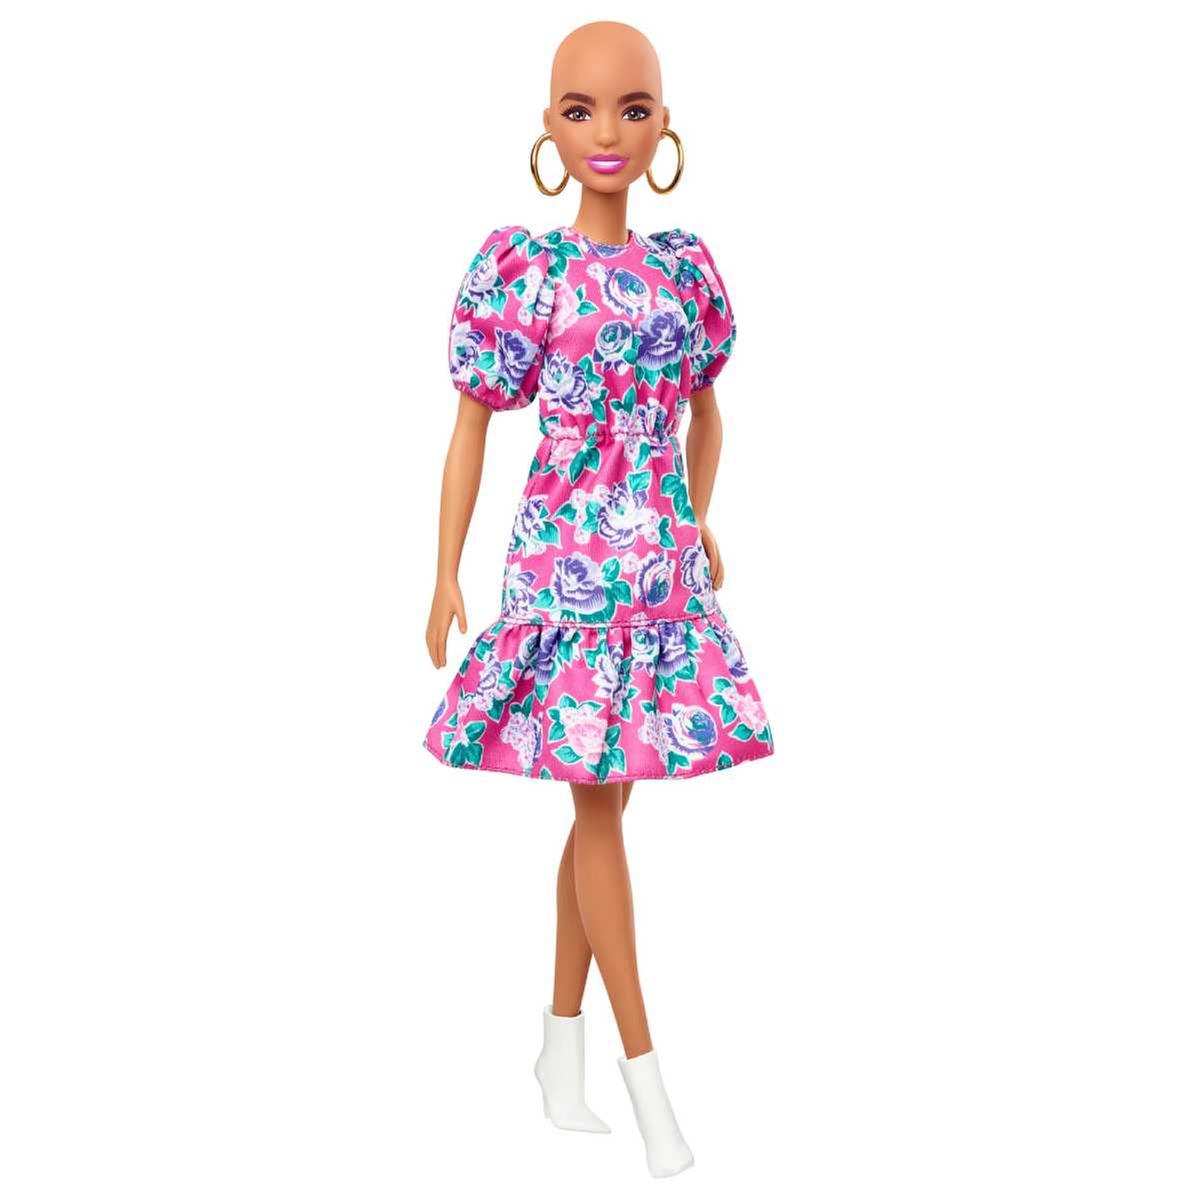 Gaviota algodón Volver a disparar Barbie - Muñeca Fashionista - Alopécica con vestidos de flores | Barbie |  Toys"R"Us España